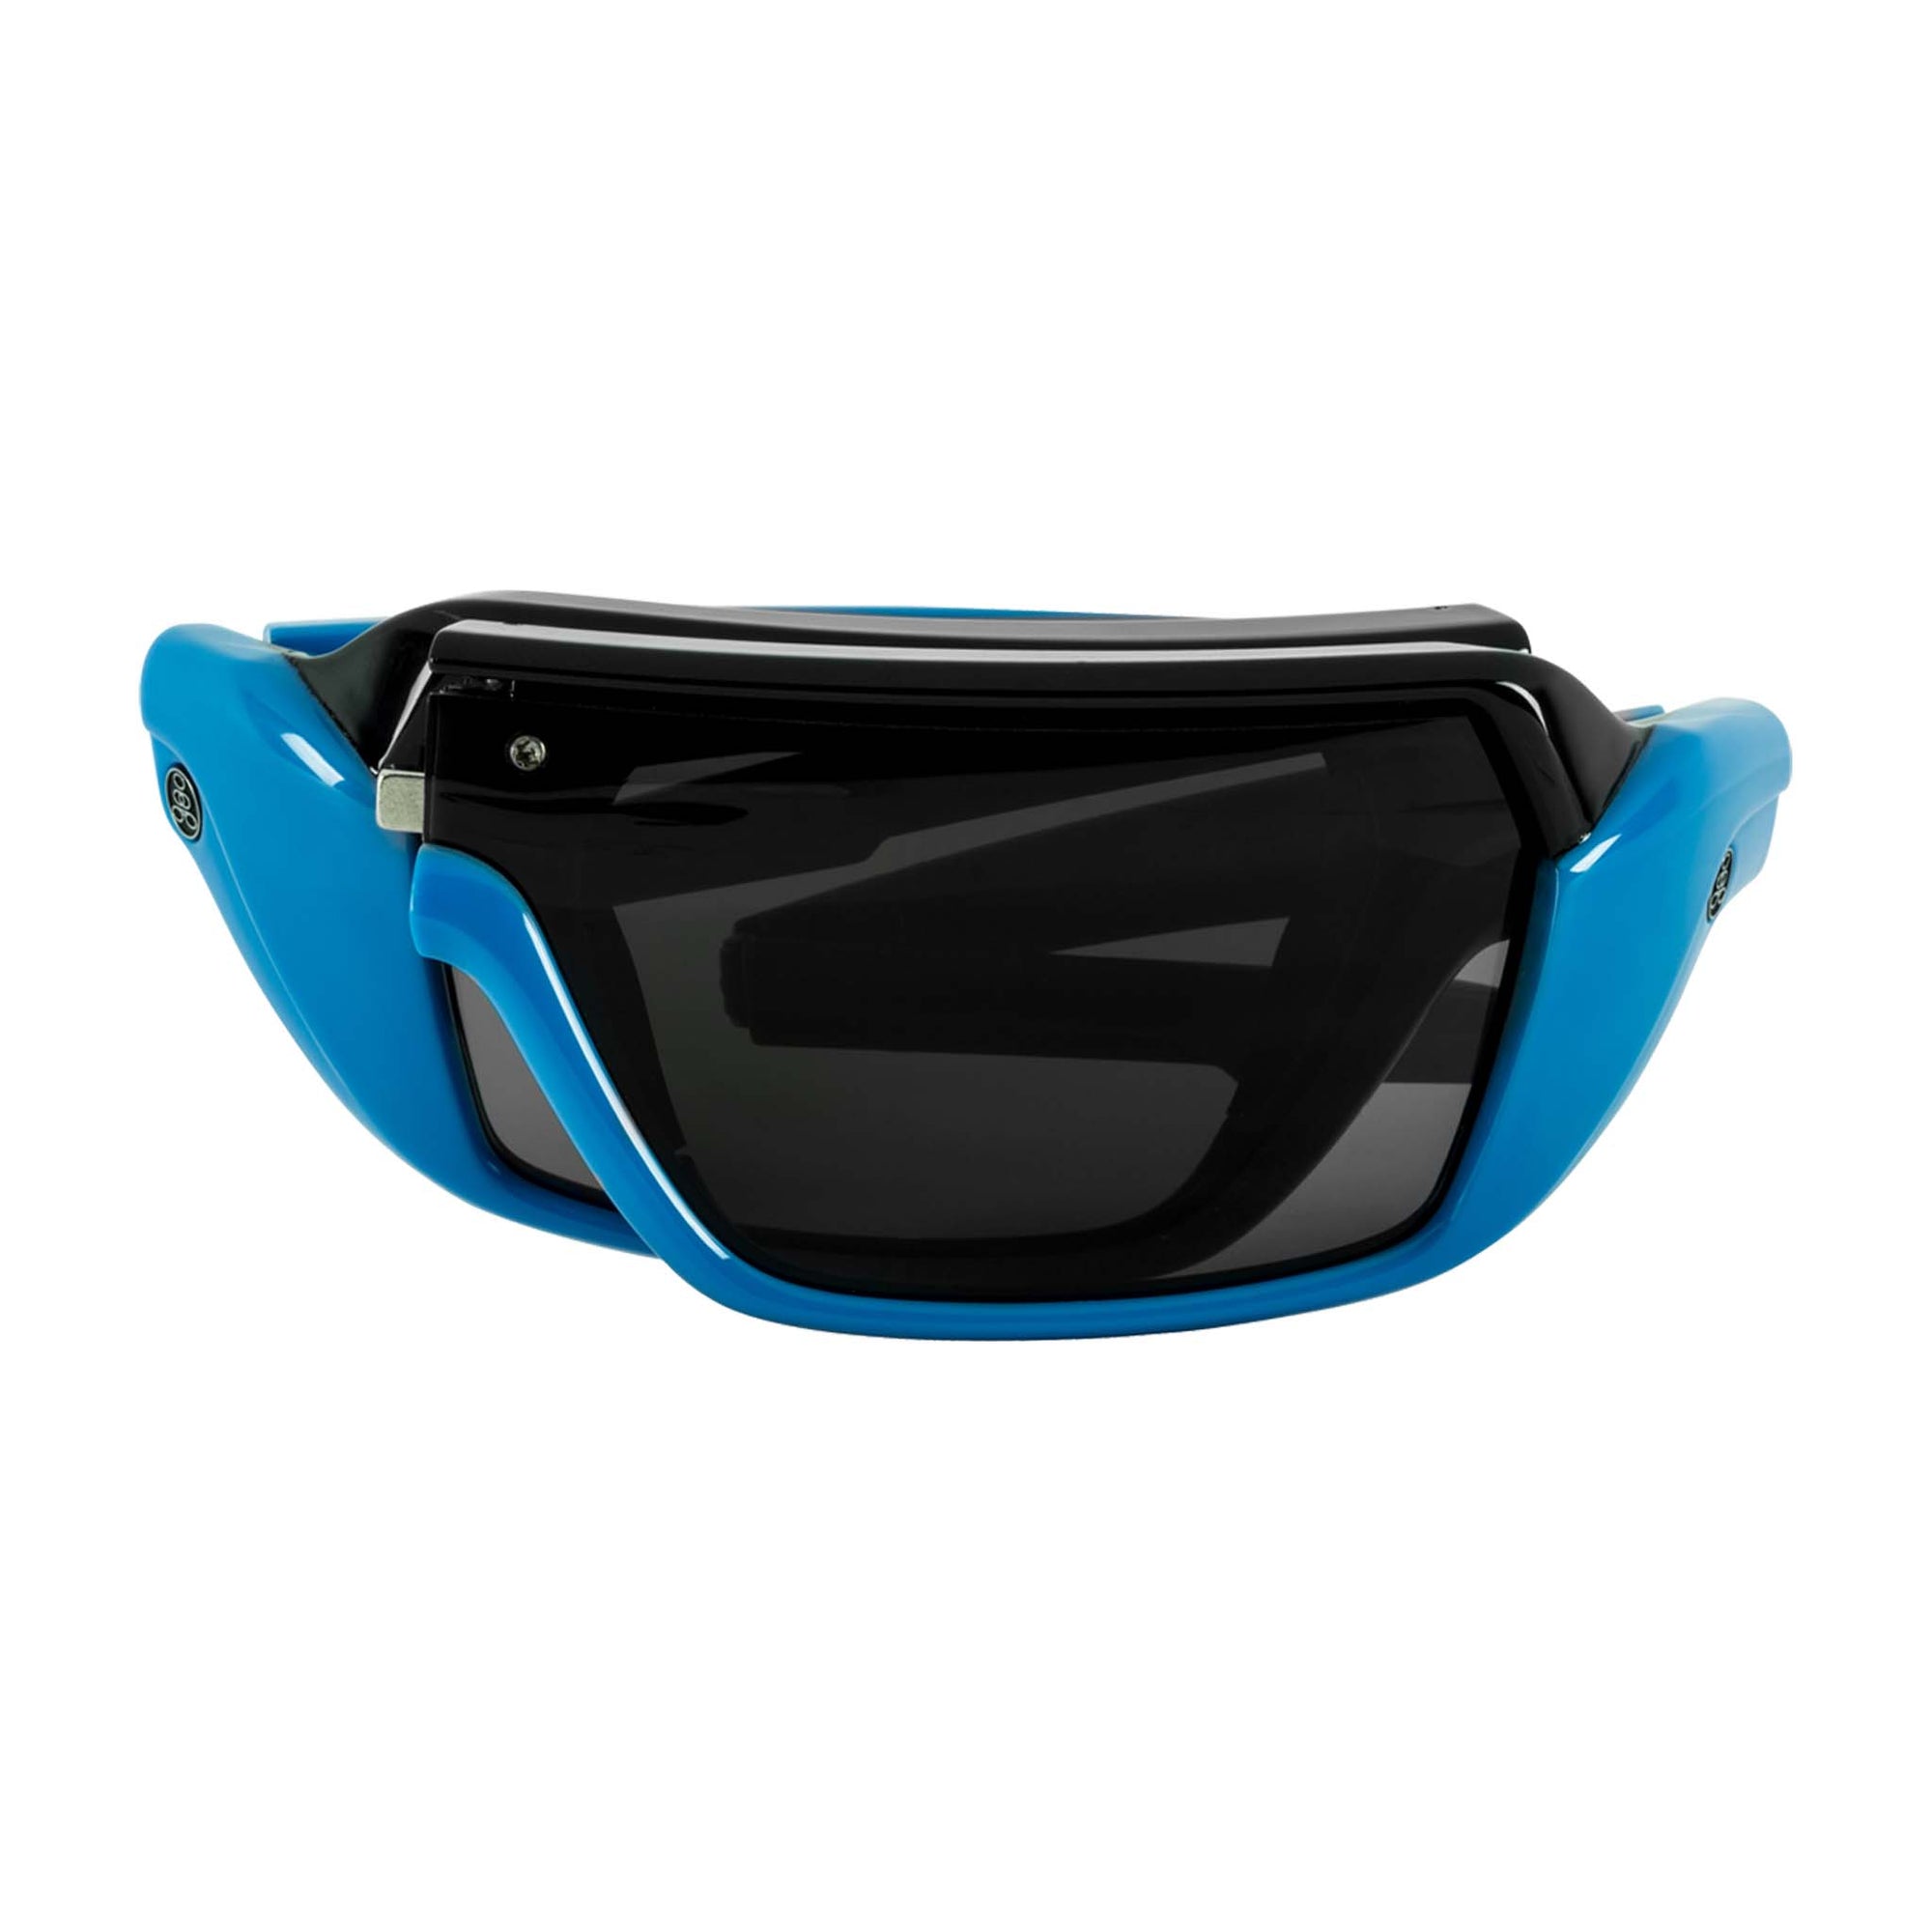 Popticals, Premium Compact Sunglasses, PopStorm, 010060-UBGP, Polarized Sunglasses, Gloss Blue/Black Frame, Gray Lenses, Compact View